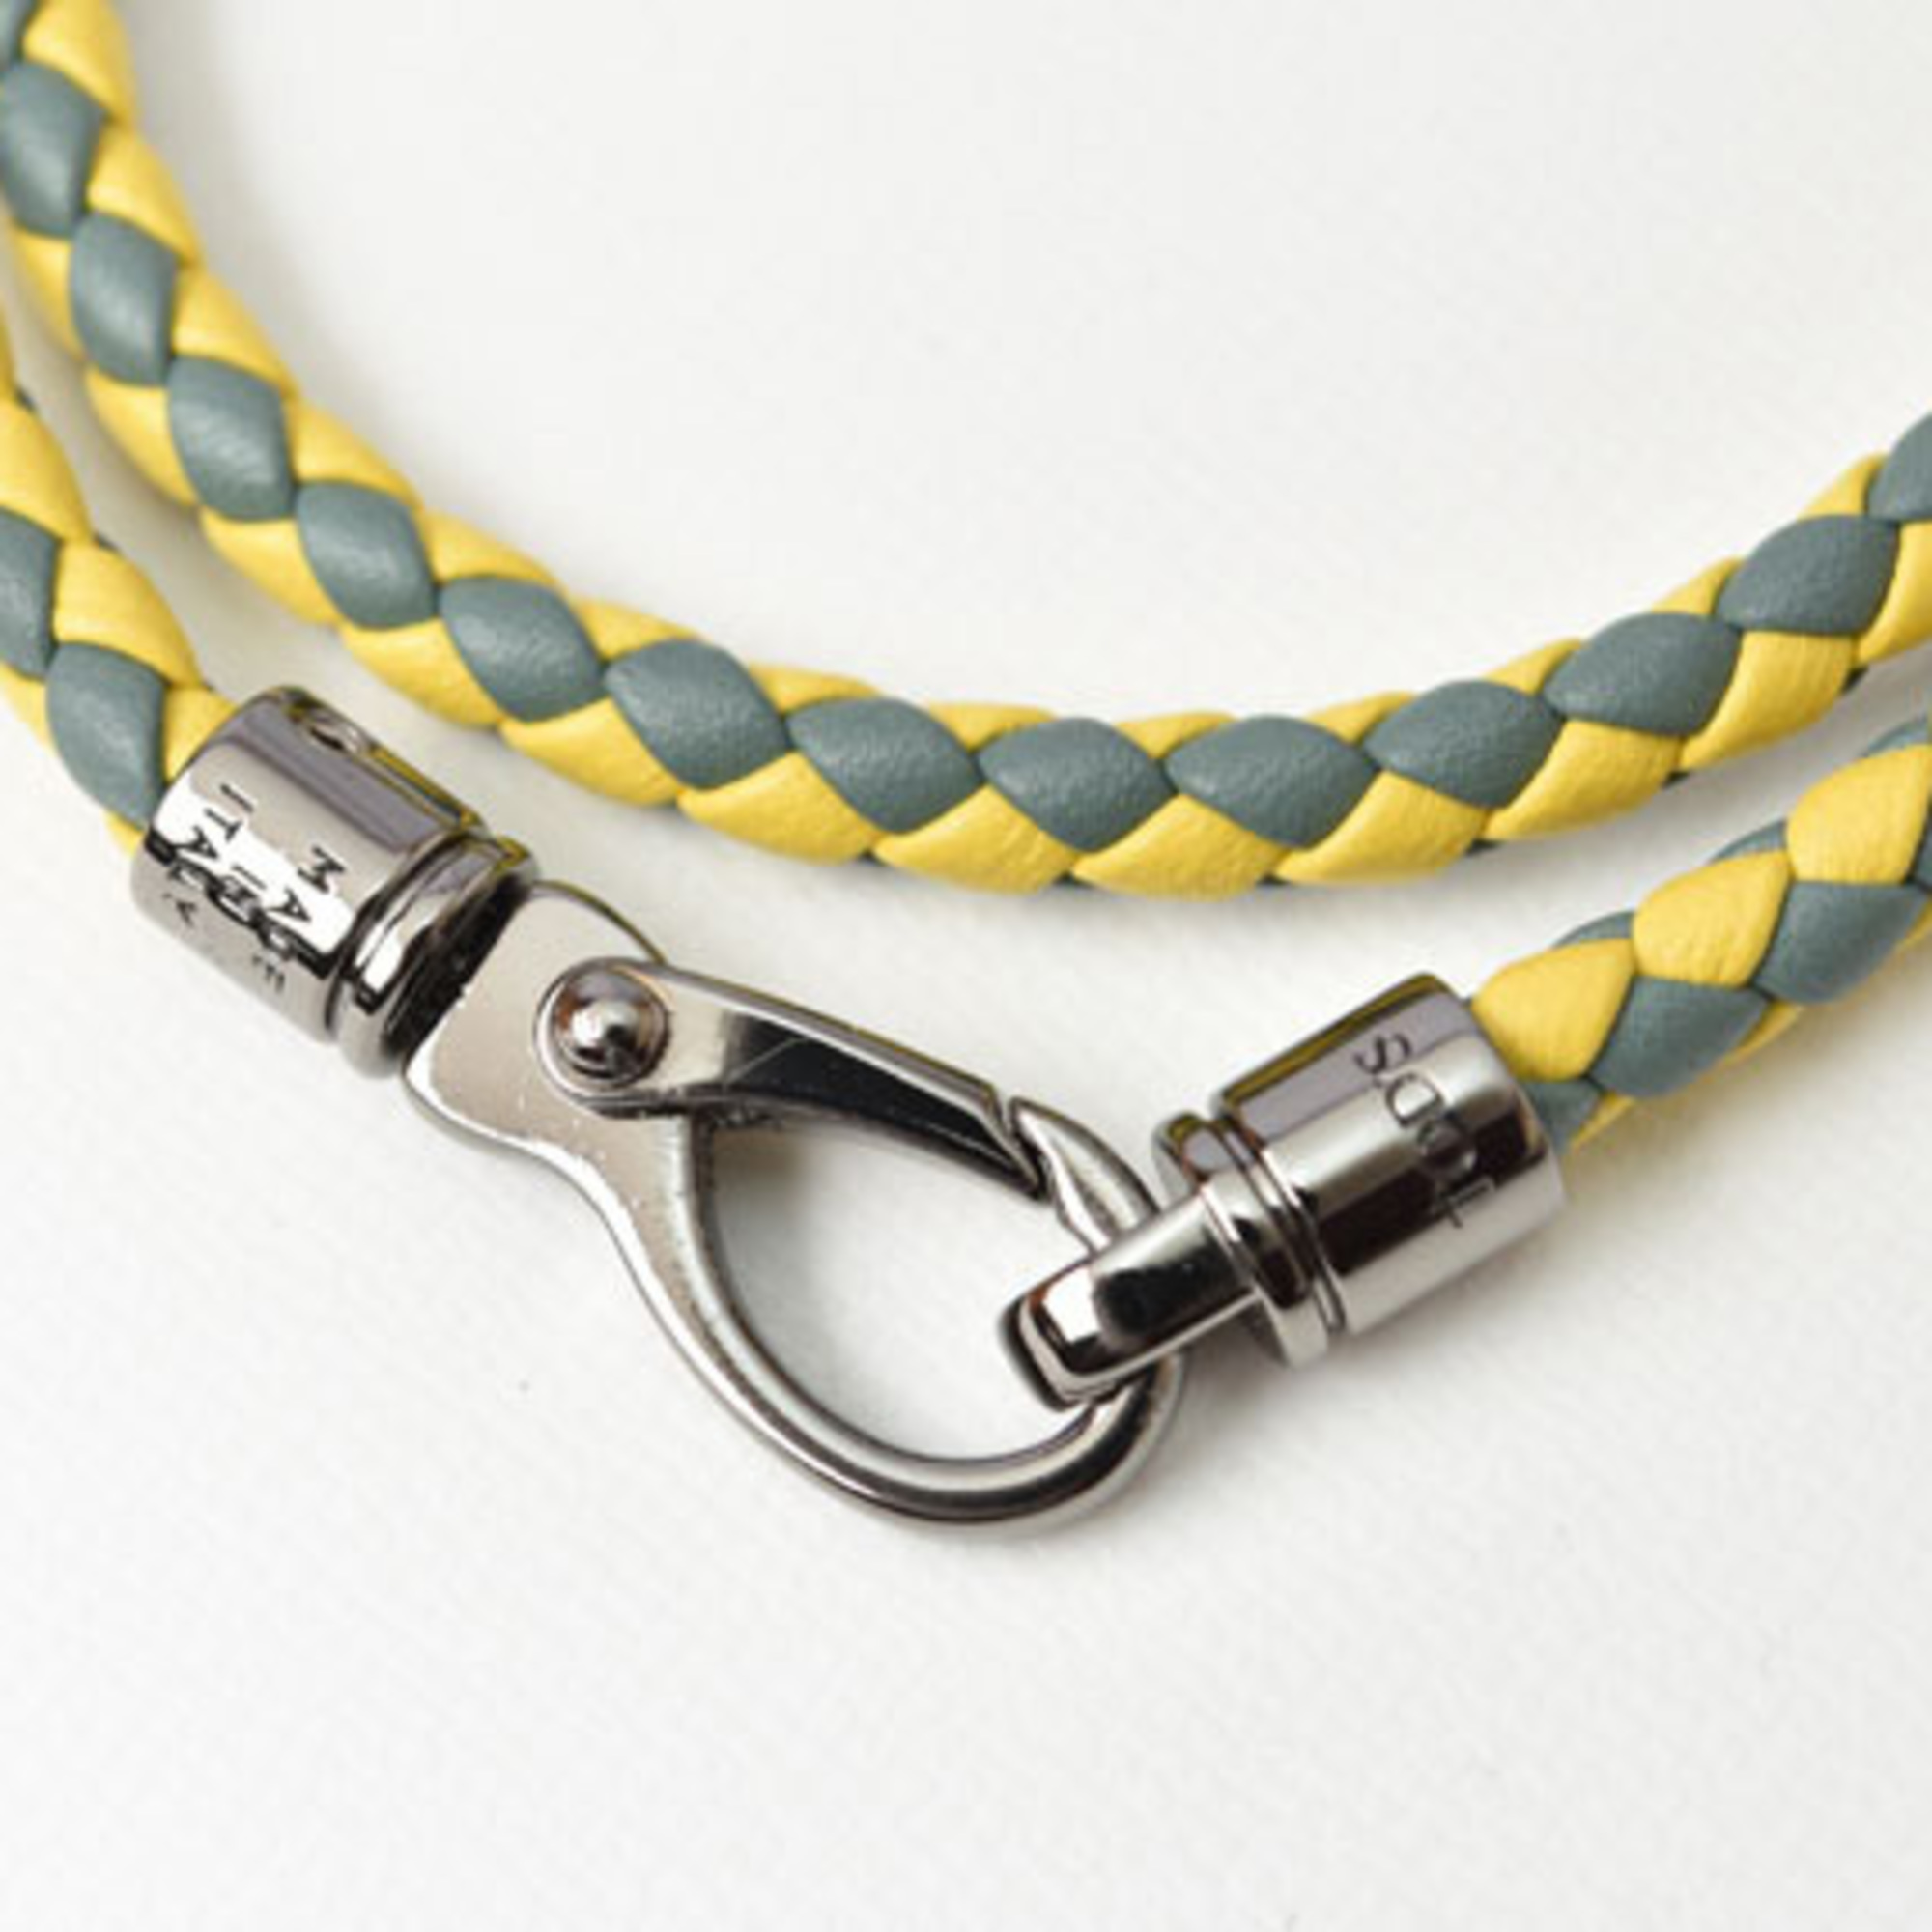 Tod's Bracelet Bangle 2 Strands Intrecciato TOD'S Men's Line Leather Green Yellow